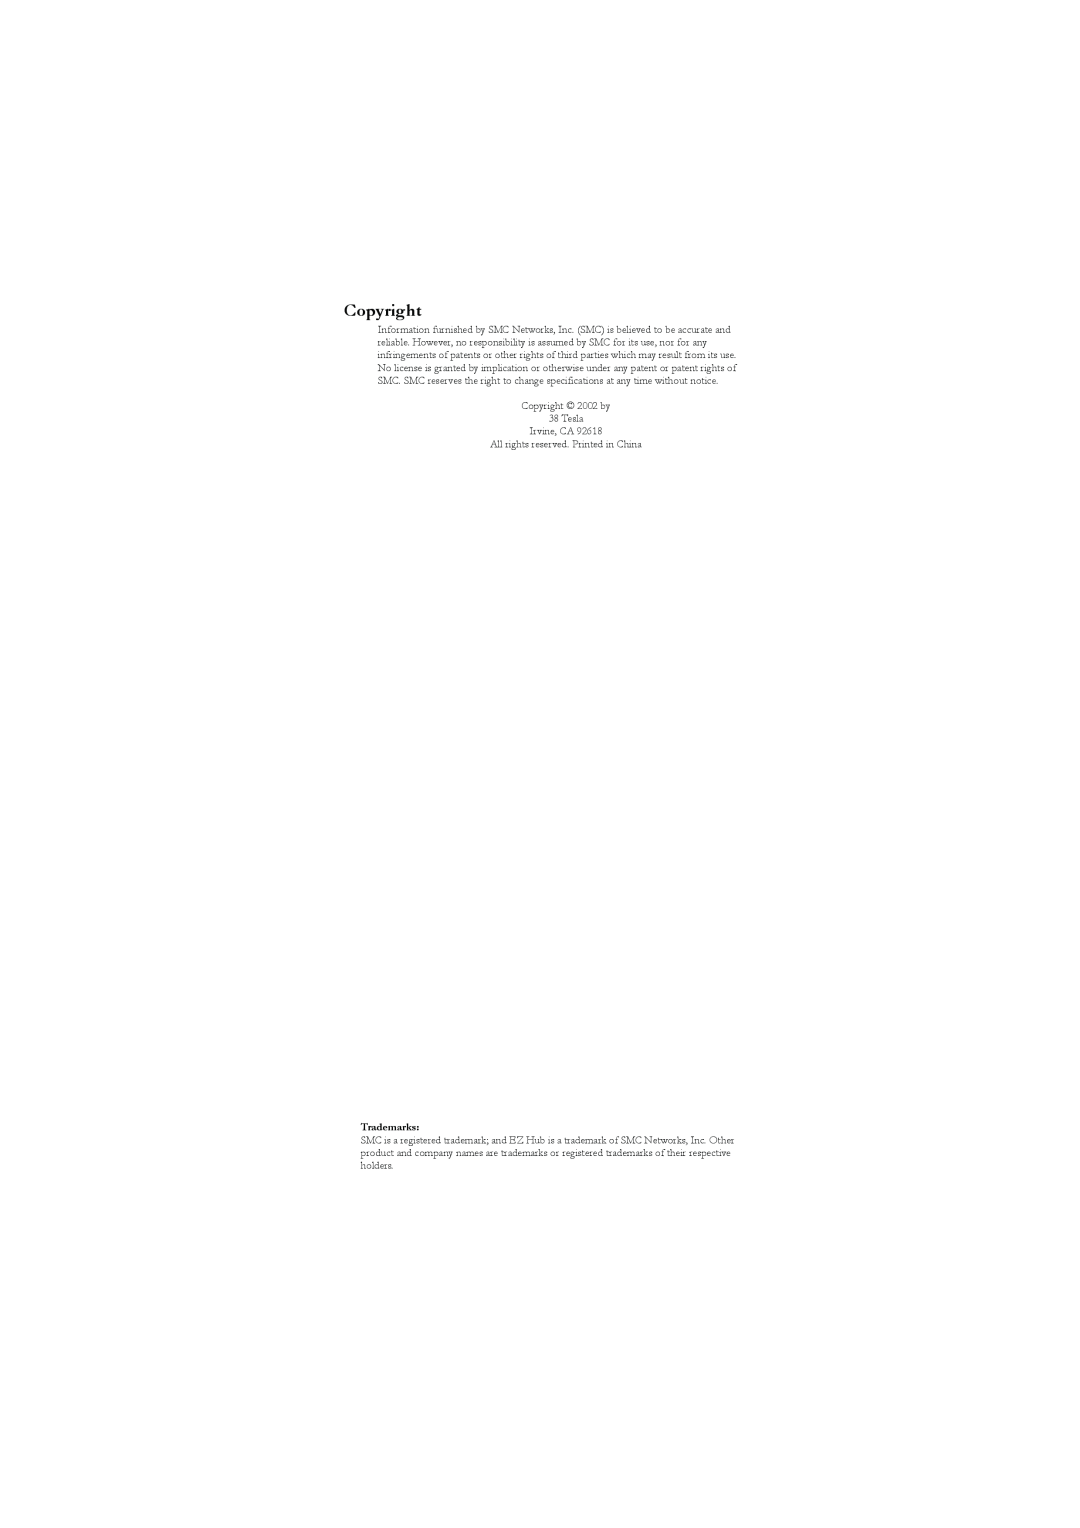 SMC Networks 10/100 manual Copyright, Trademarks 